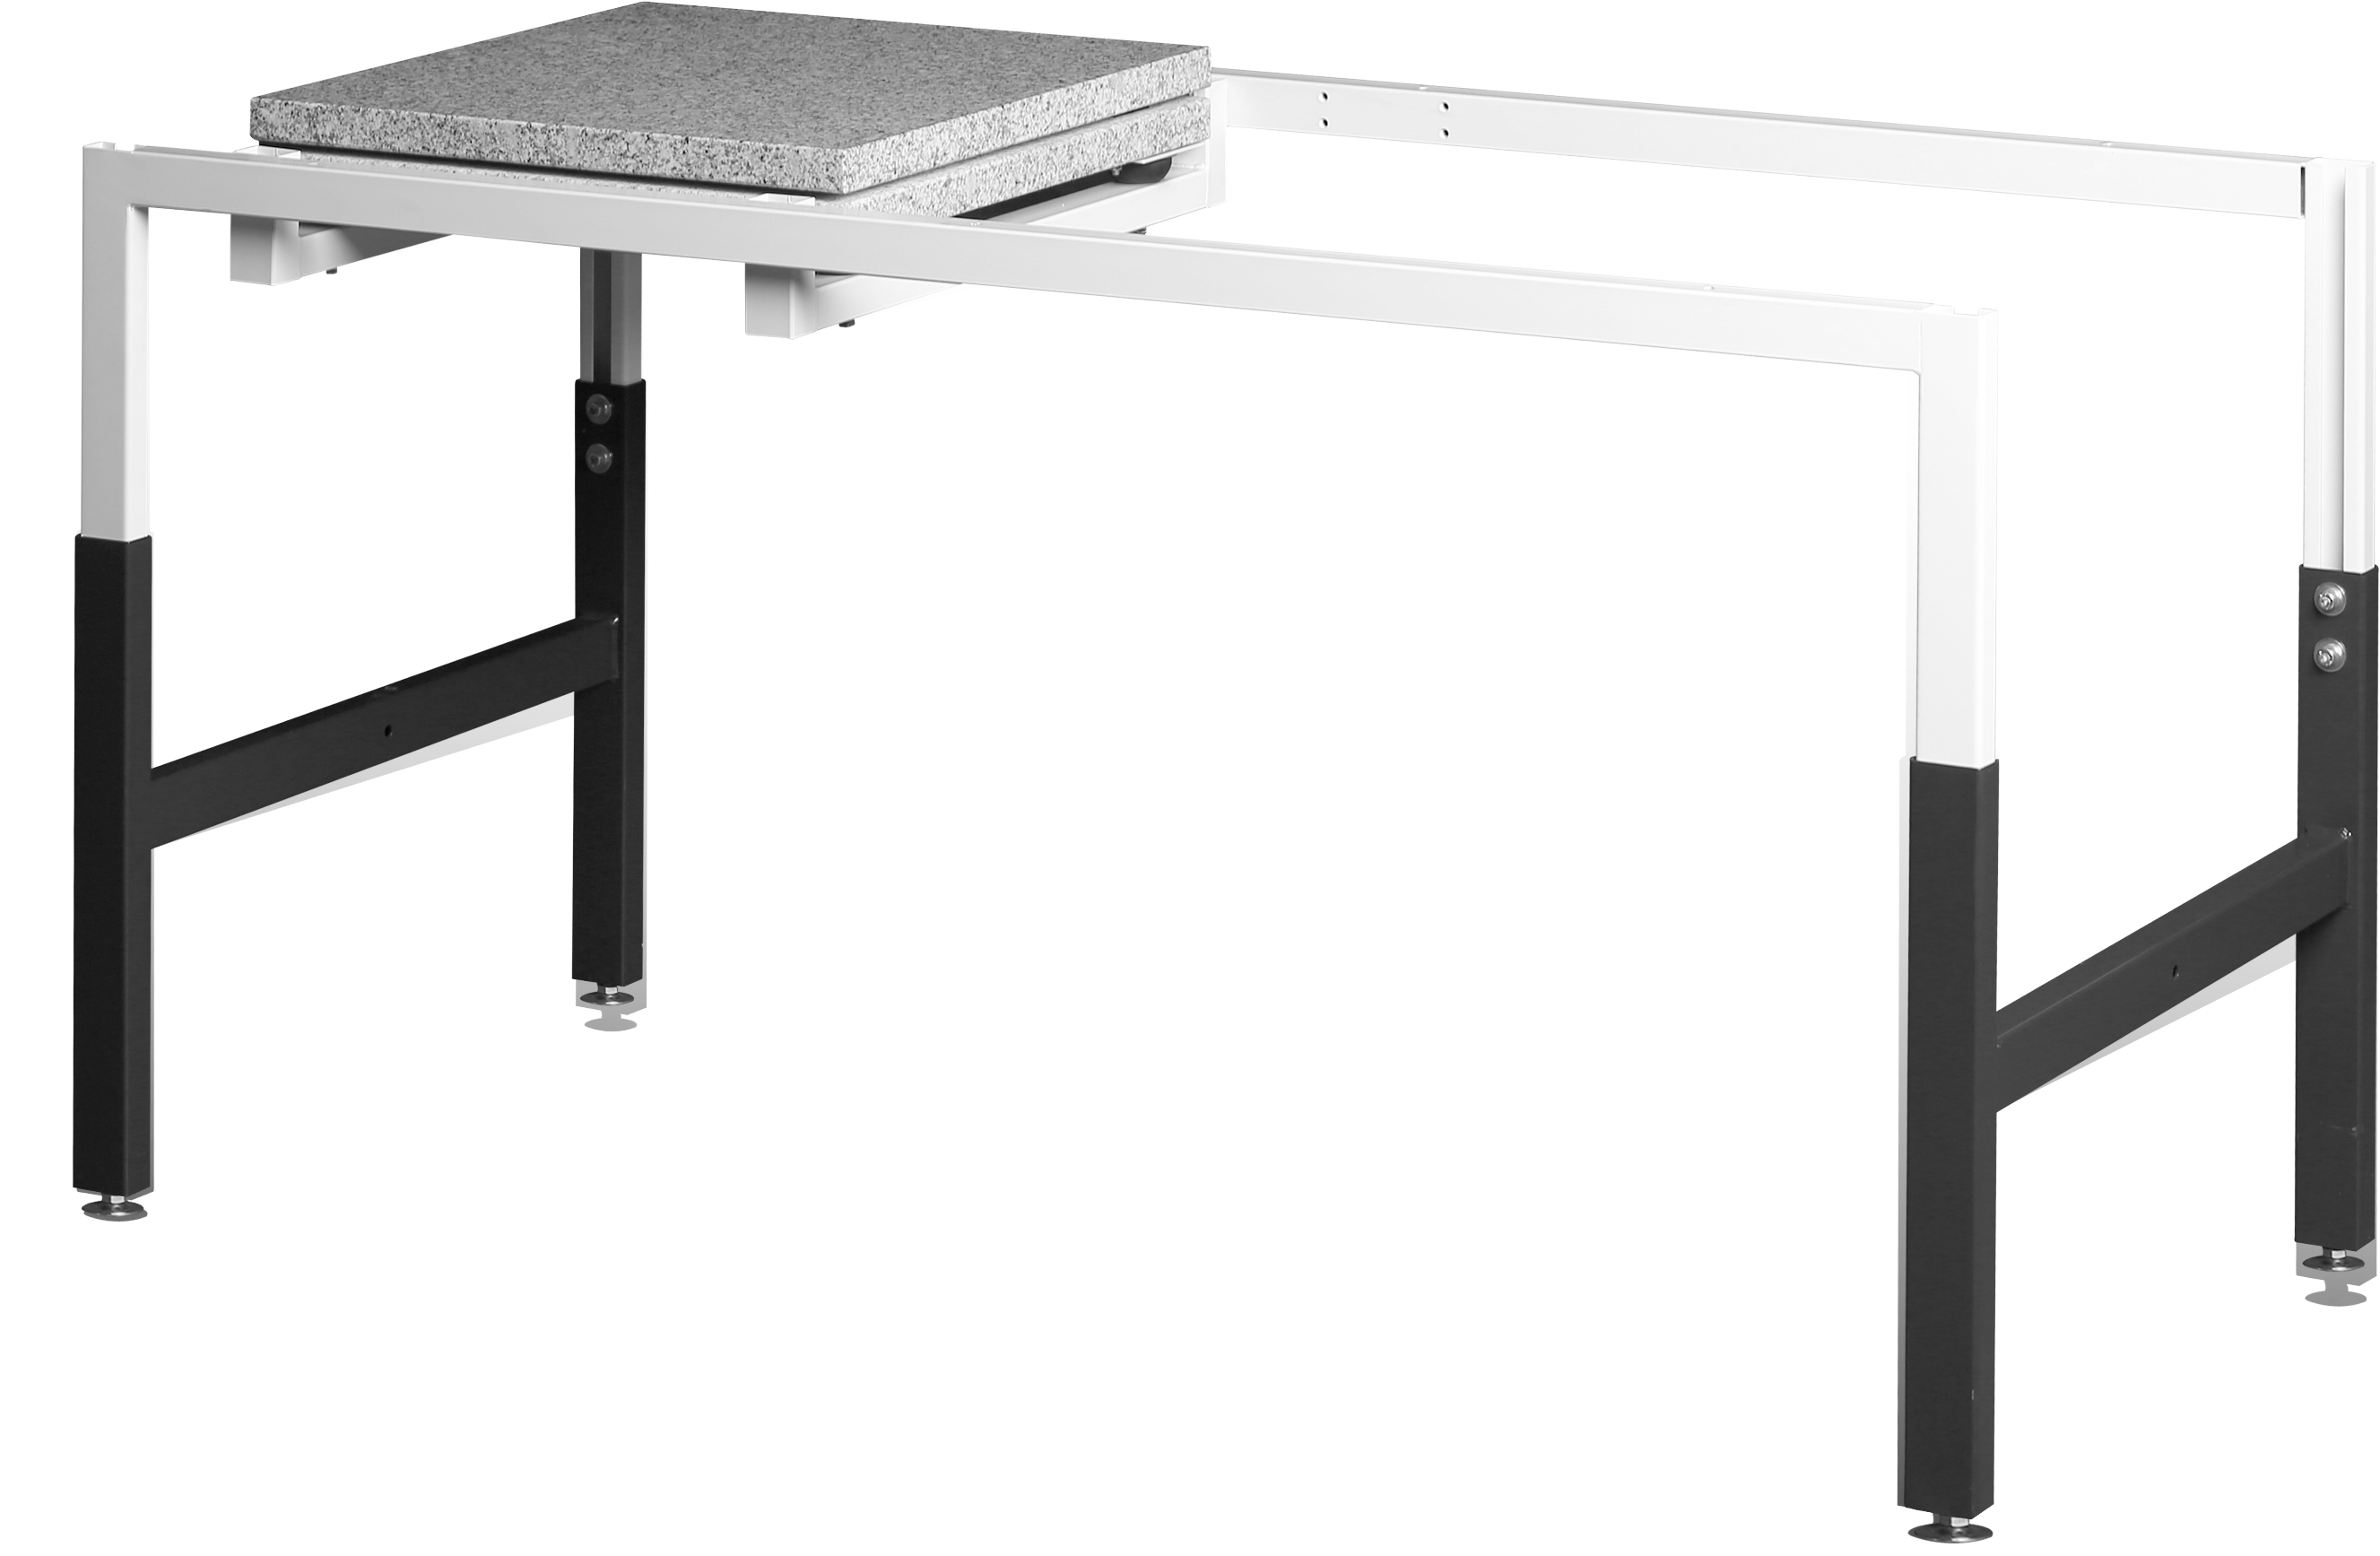 Table with anti-vibration granite platform